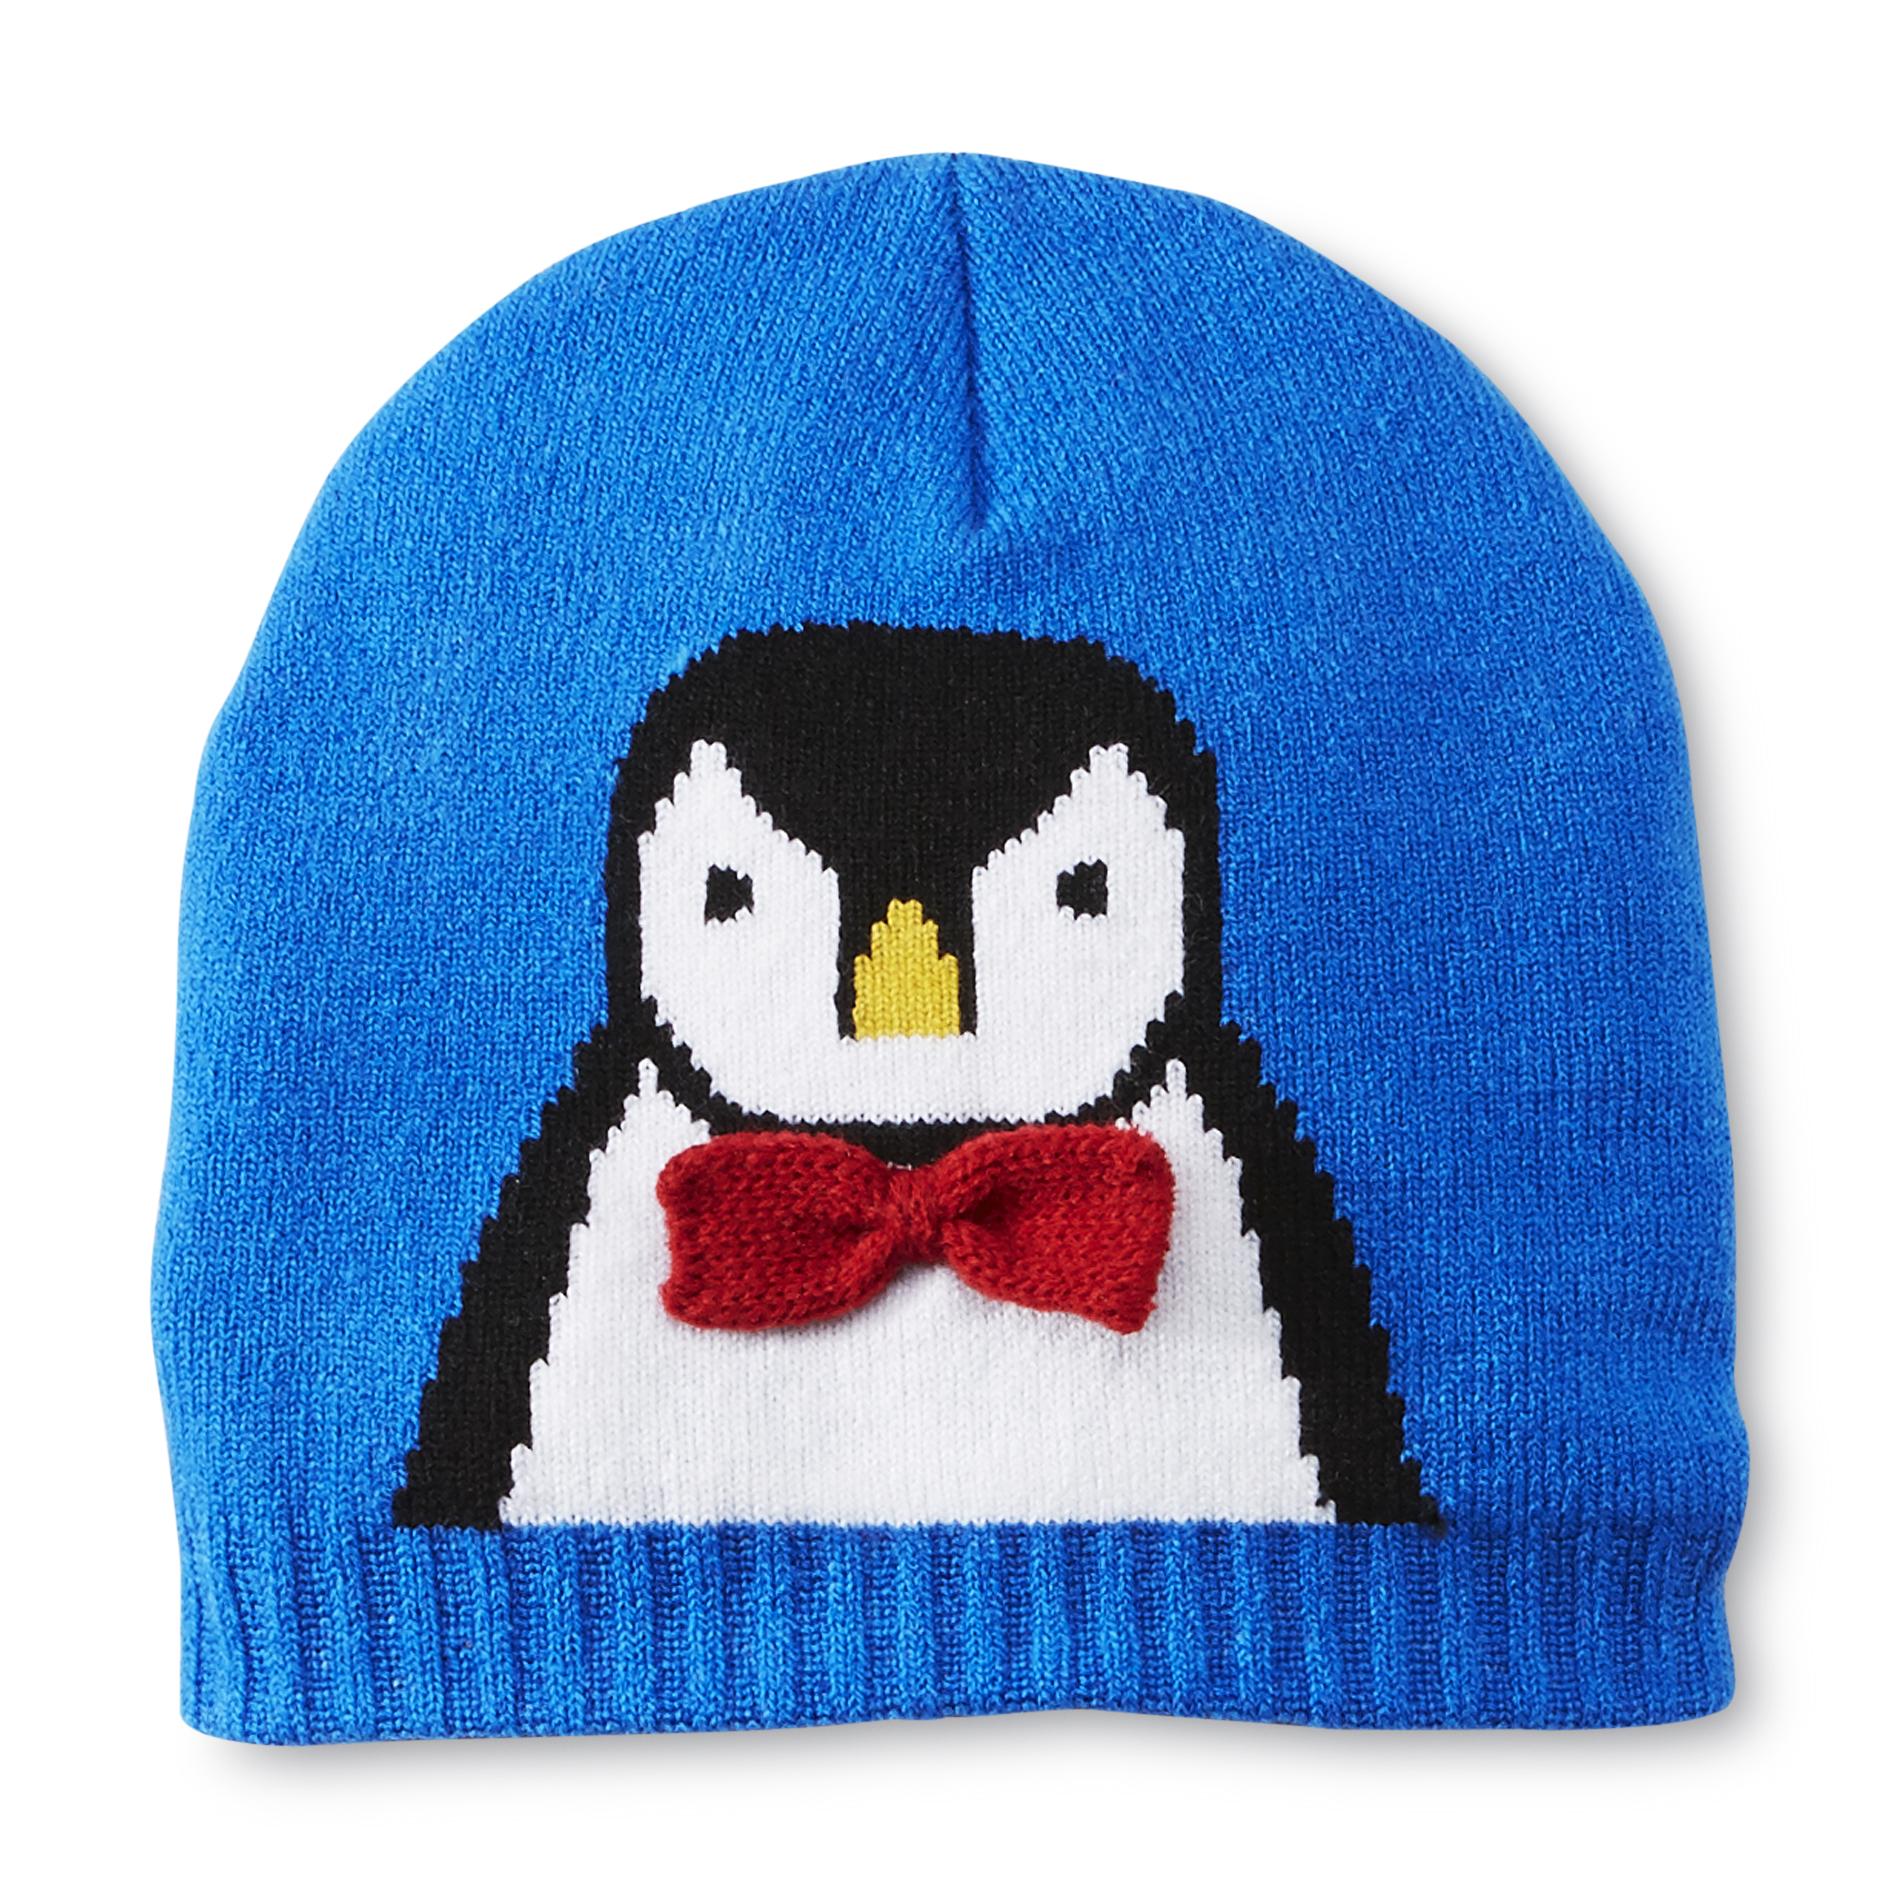 Joe Boxer Women's Knit Critter Hat - Penguin